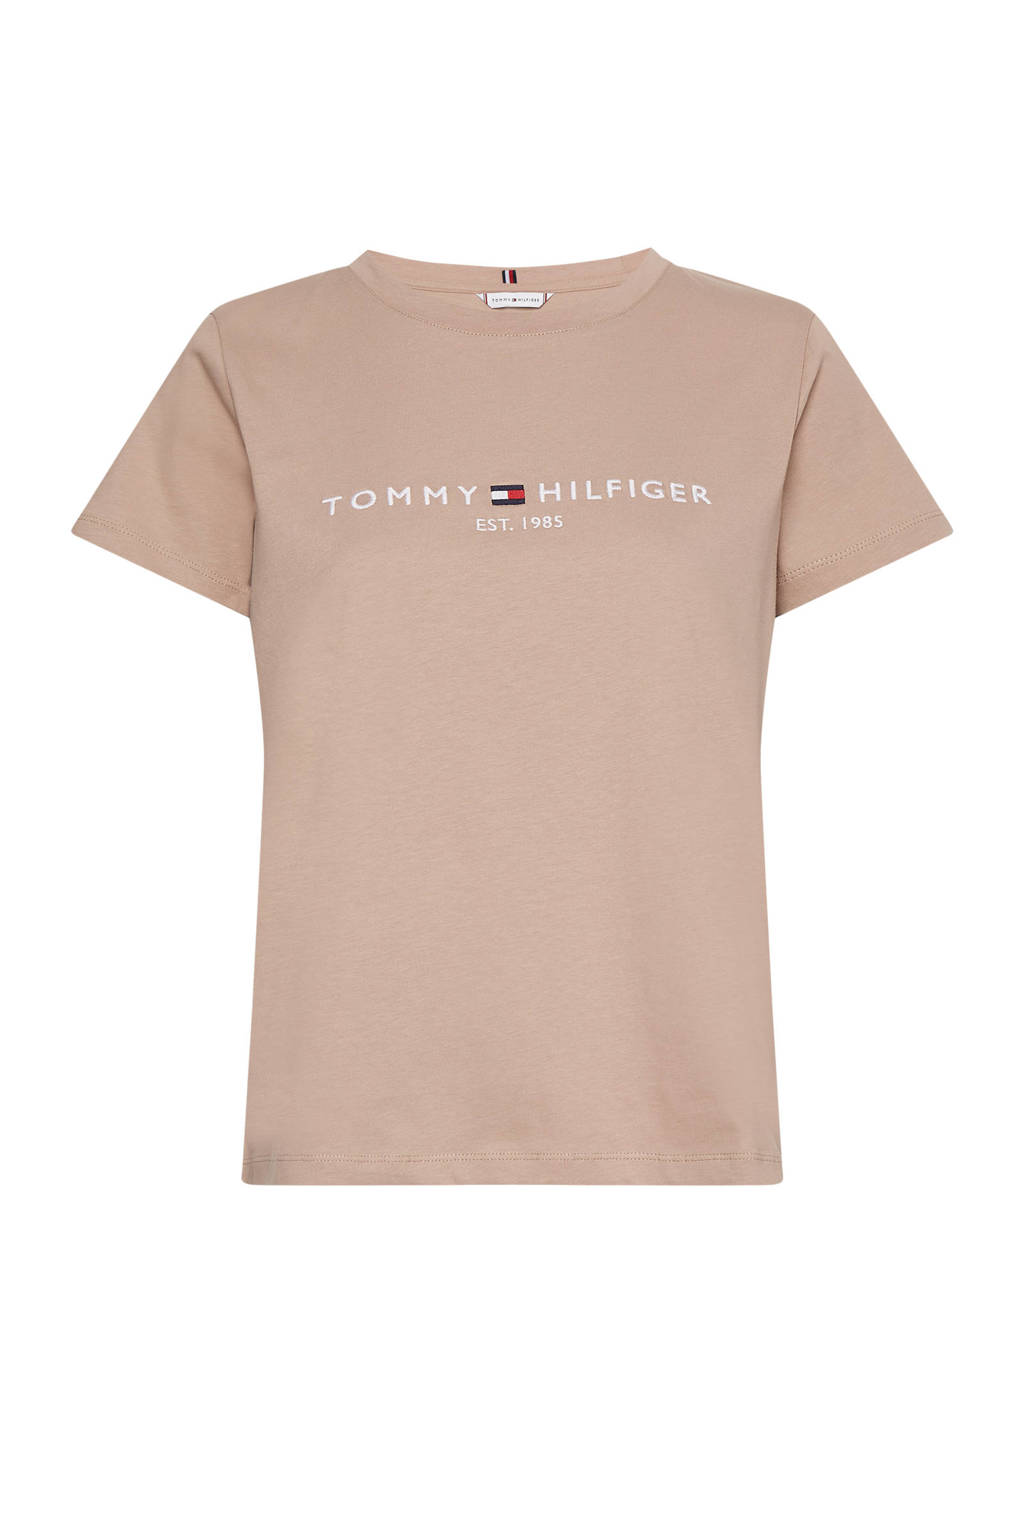 Tommy Hilfiger T-shirt met logo beige